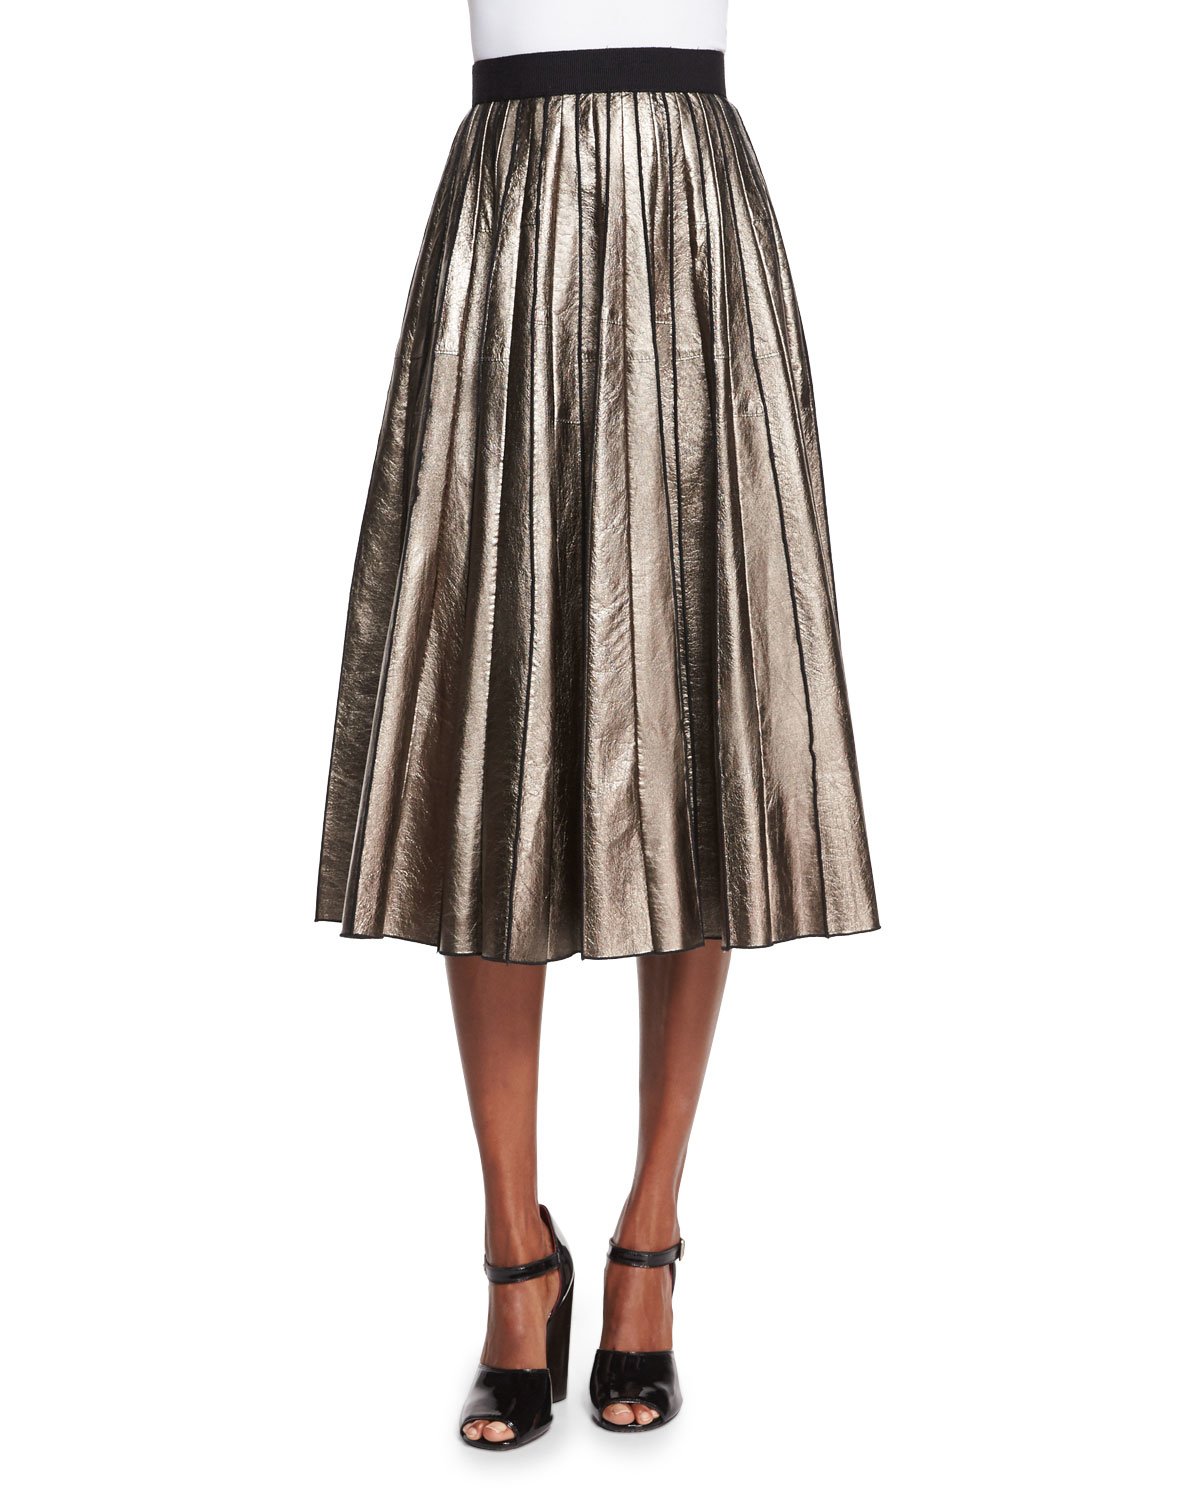 Lyst - Marc Jacobs Pleated Metallic Leather Skirt in Metallic